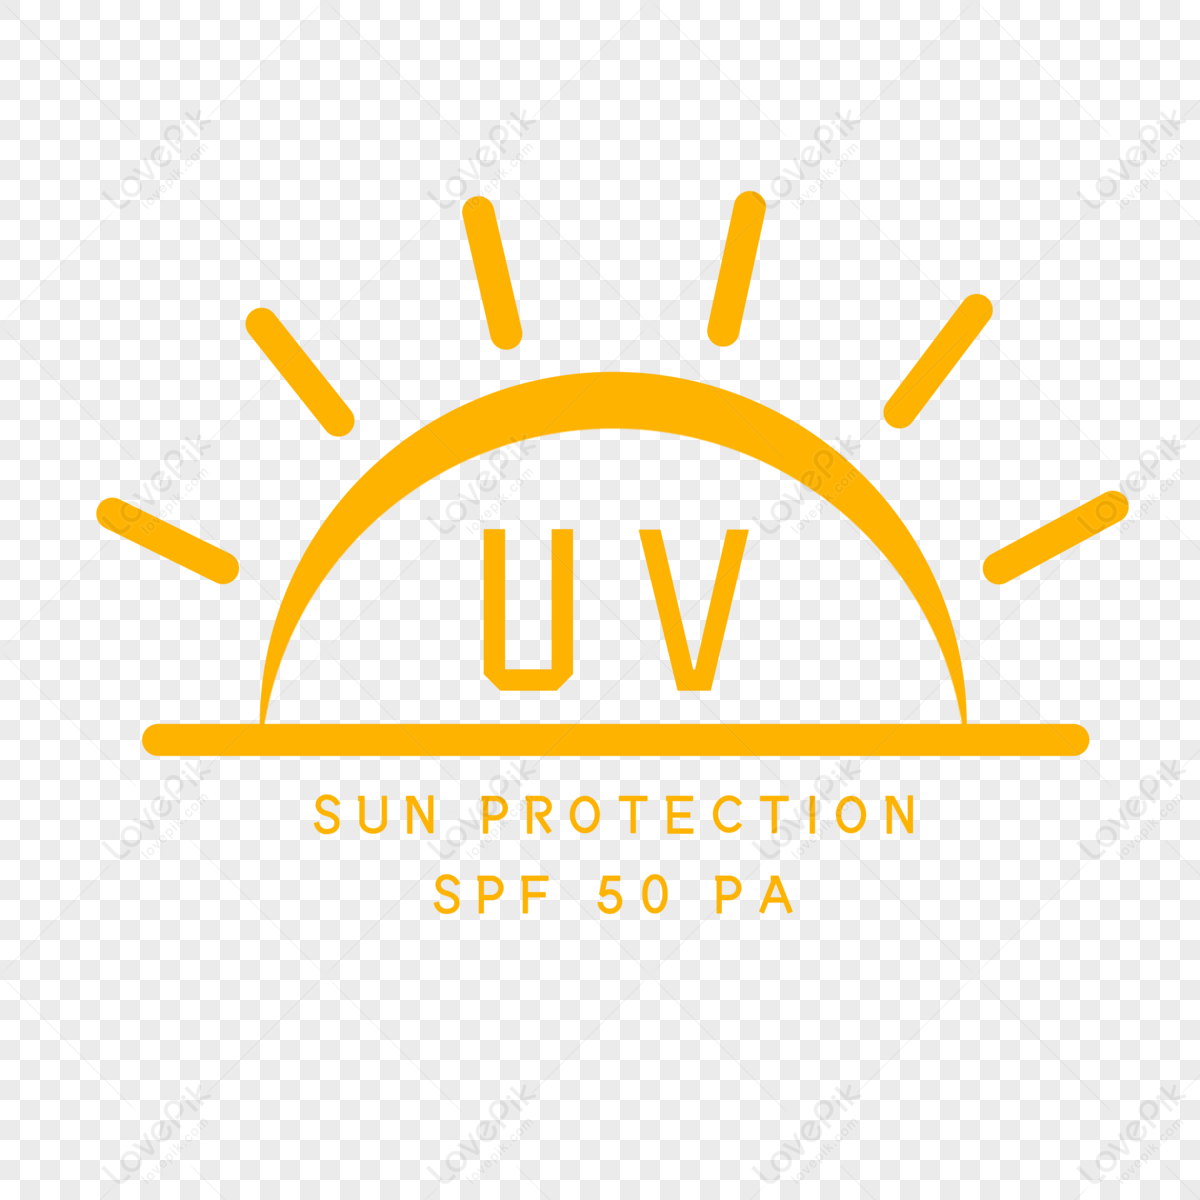 Uv Logo , Uva Uvb and Spf with Orange Color Stock Illustration -  Illustration of icon, human: 71400933